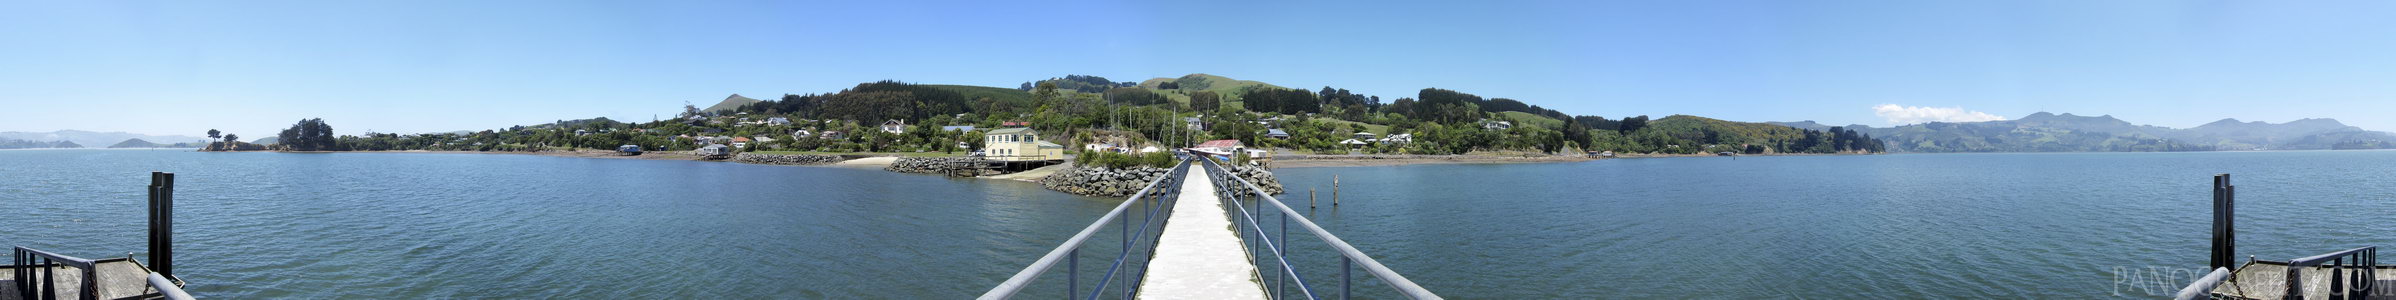 Broad Bay From A Dock - Otago Peninsula, Otago, New Zealand